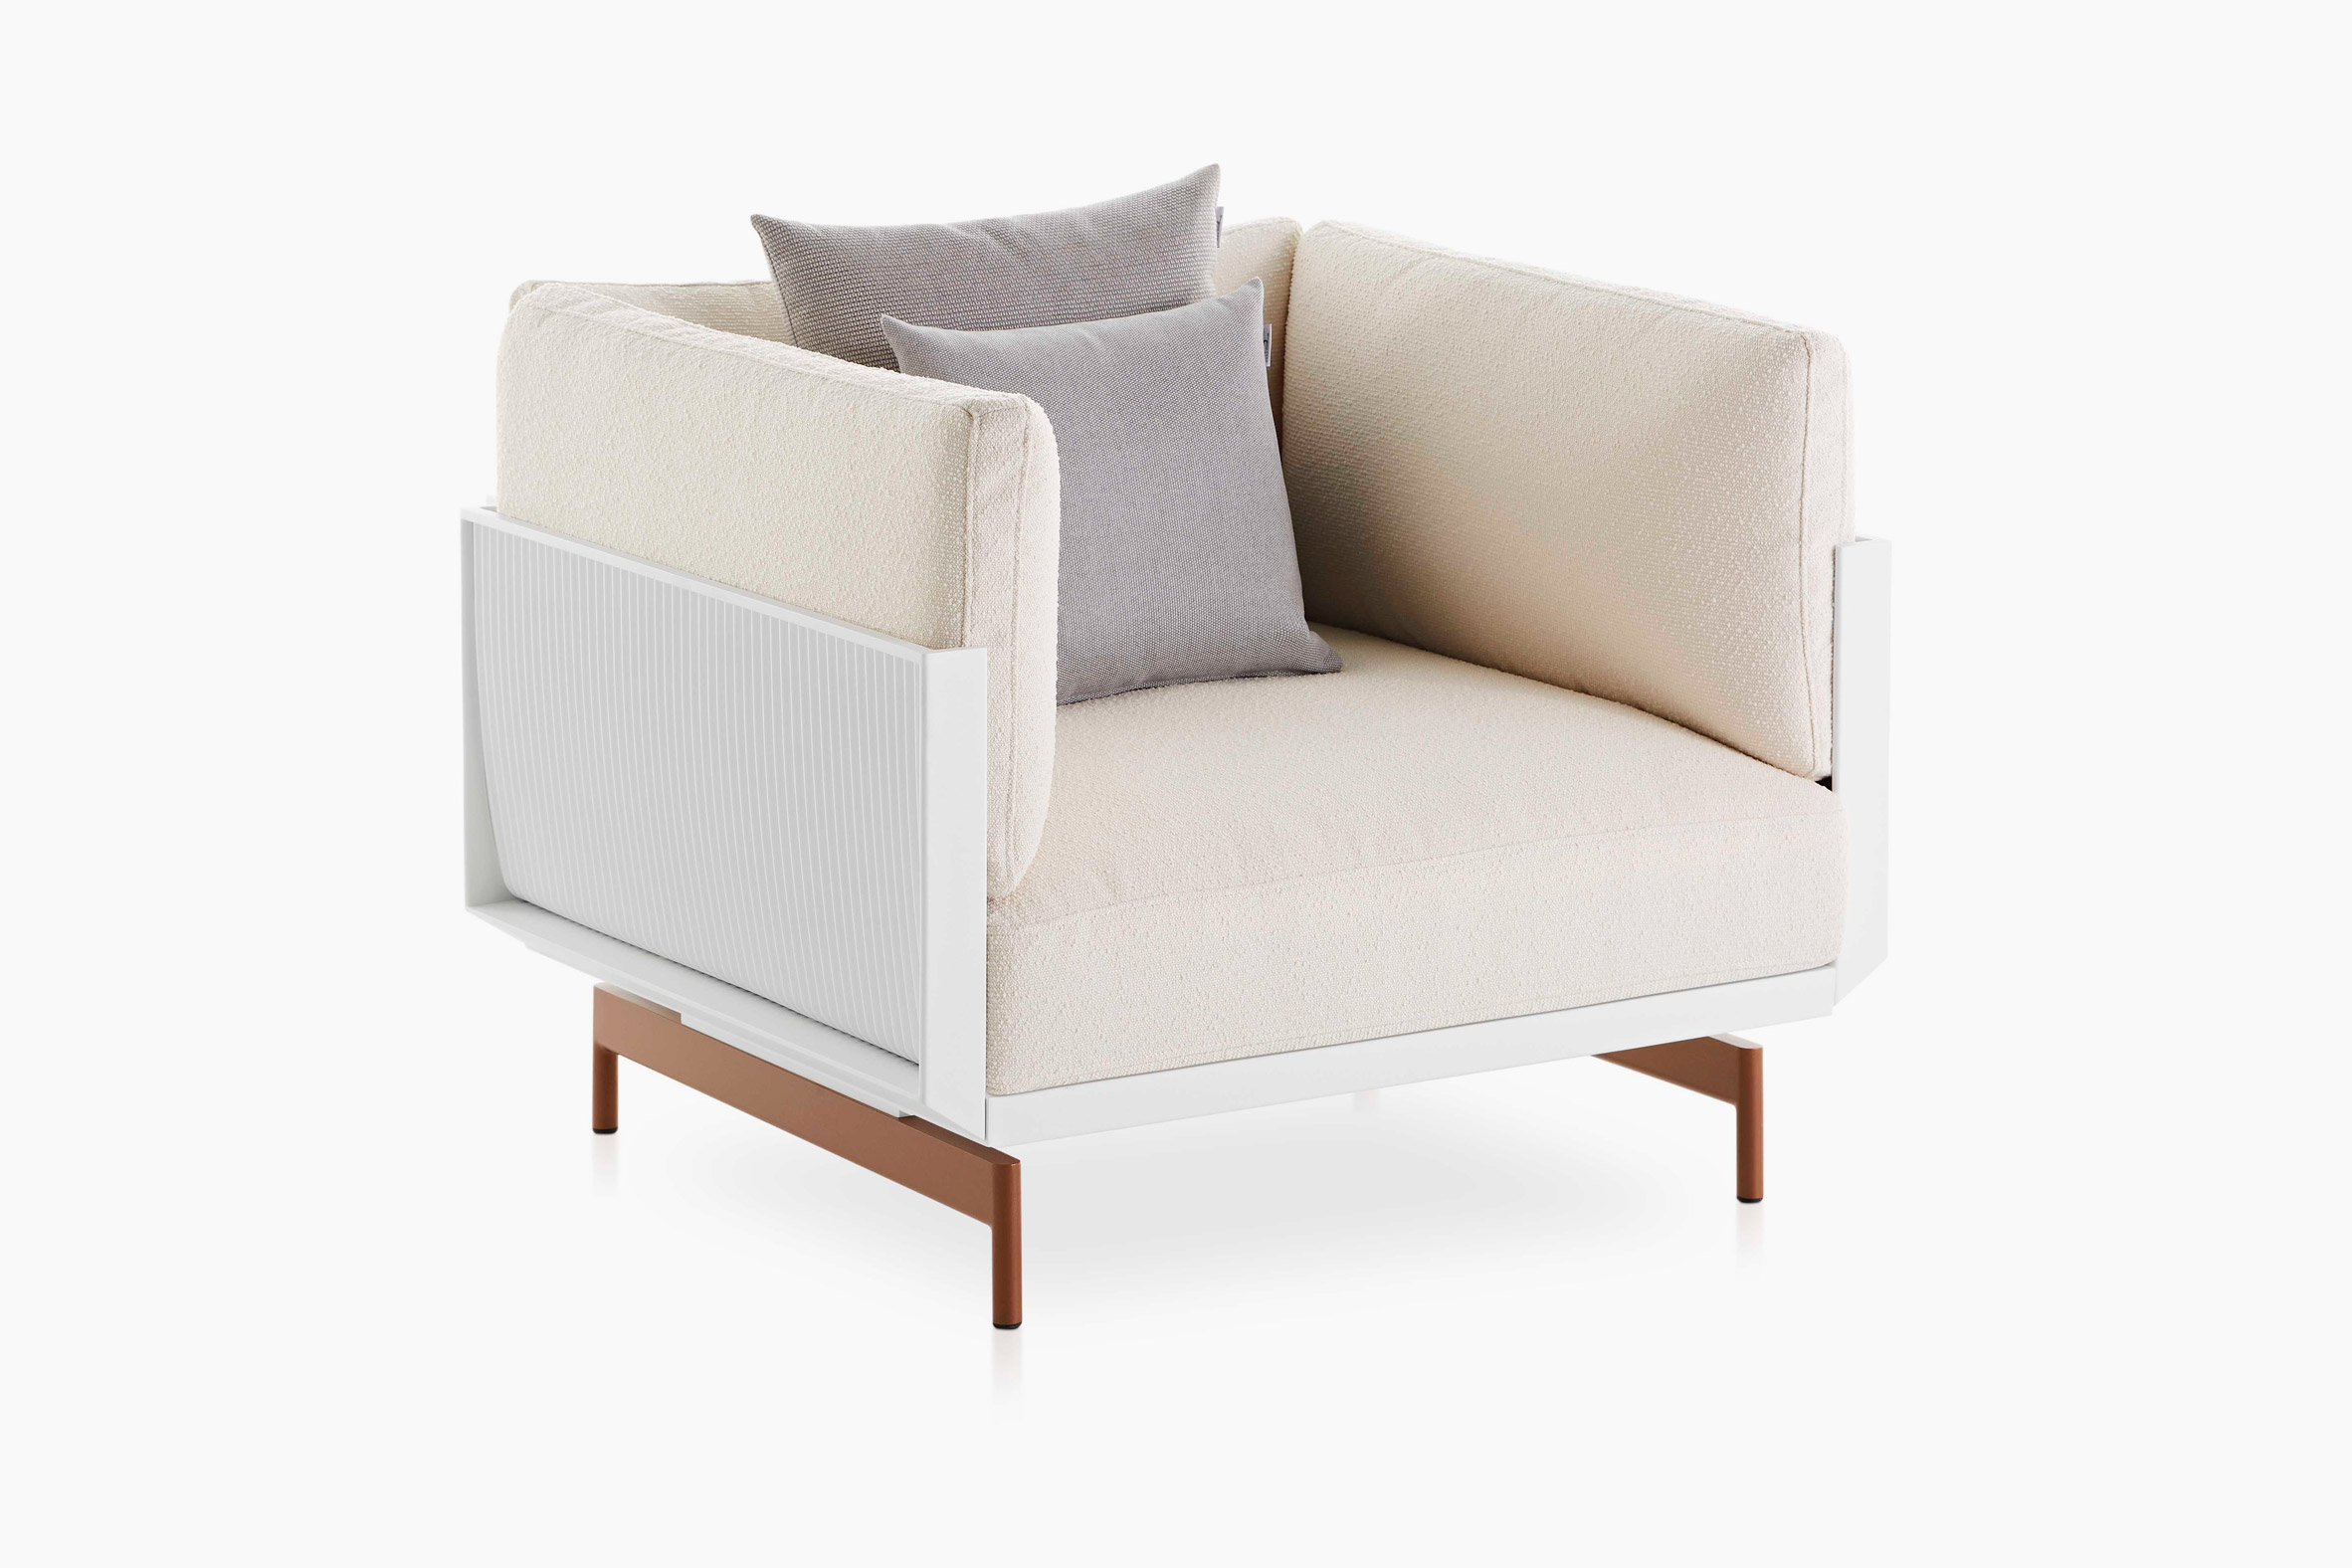 A white modular armchair by Luca Nichetto for Gandia Blasco